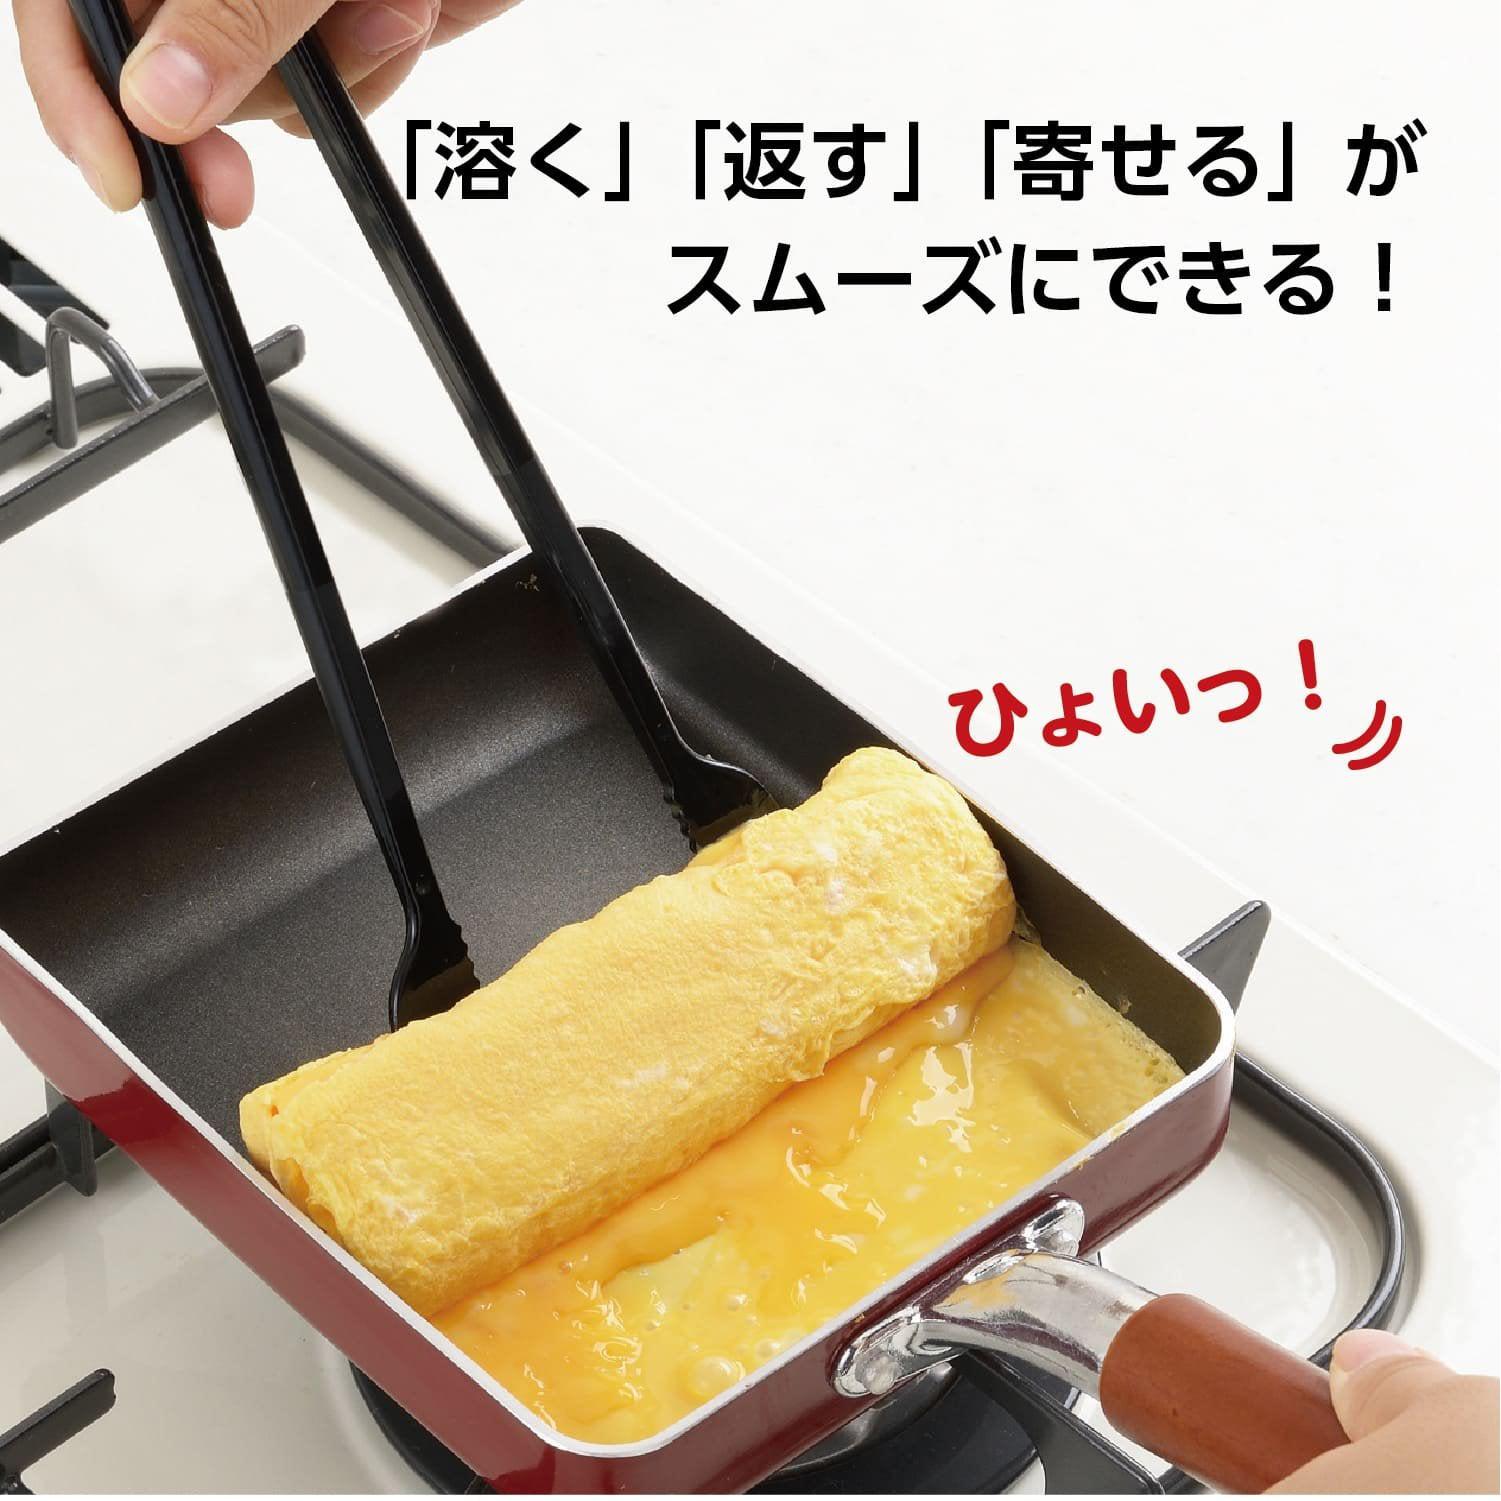 Iwachu Nambu Cast Iron Omelette Frying Pan 24cm 24601 by Japanese Taste